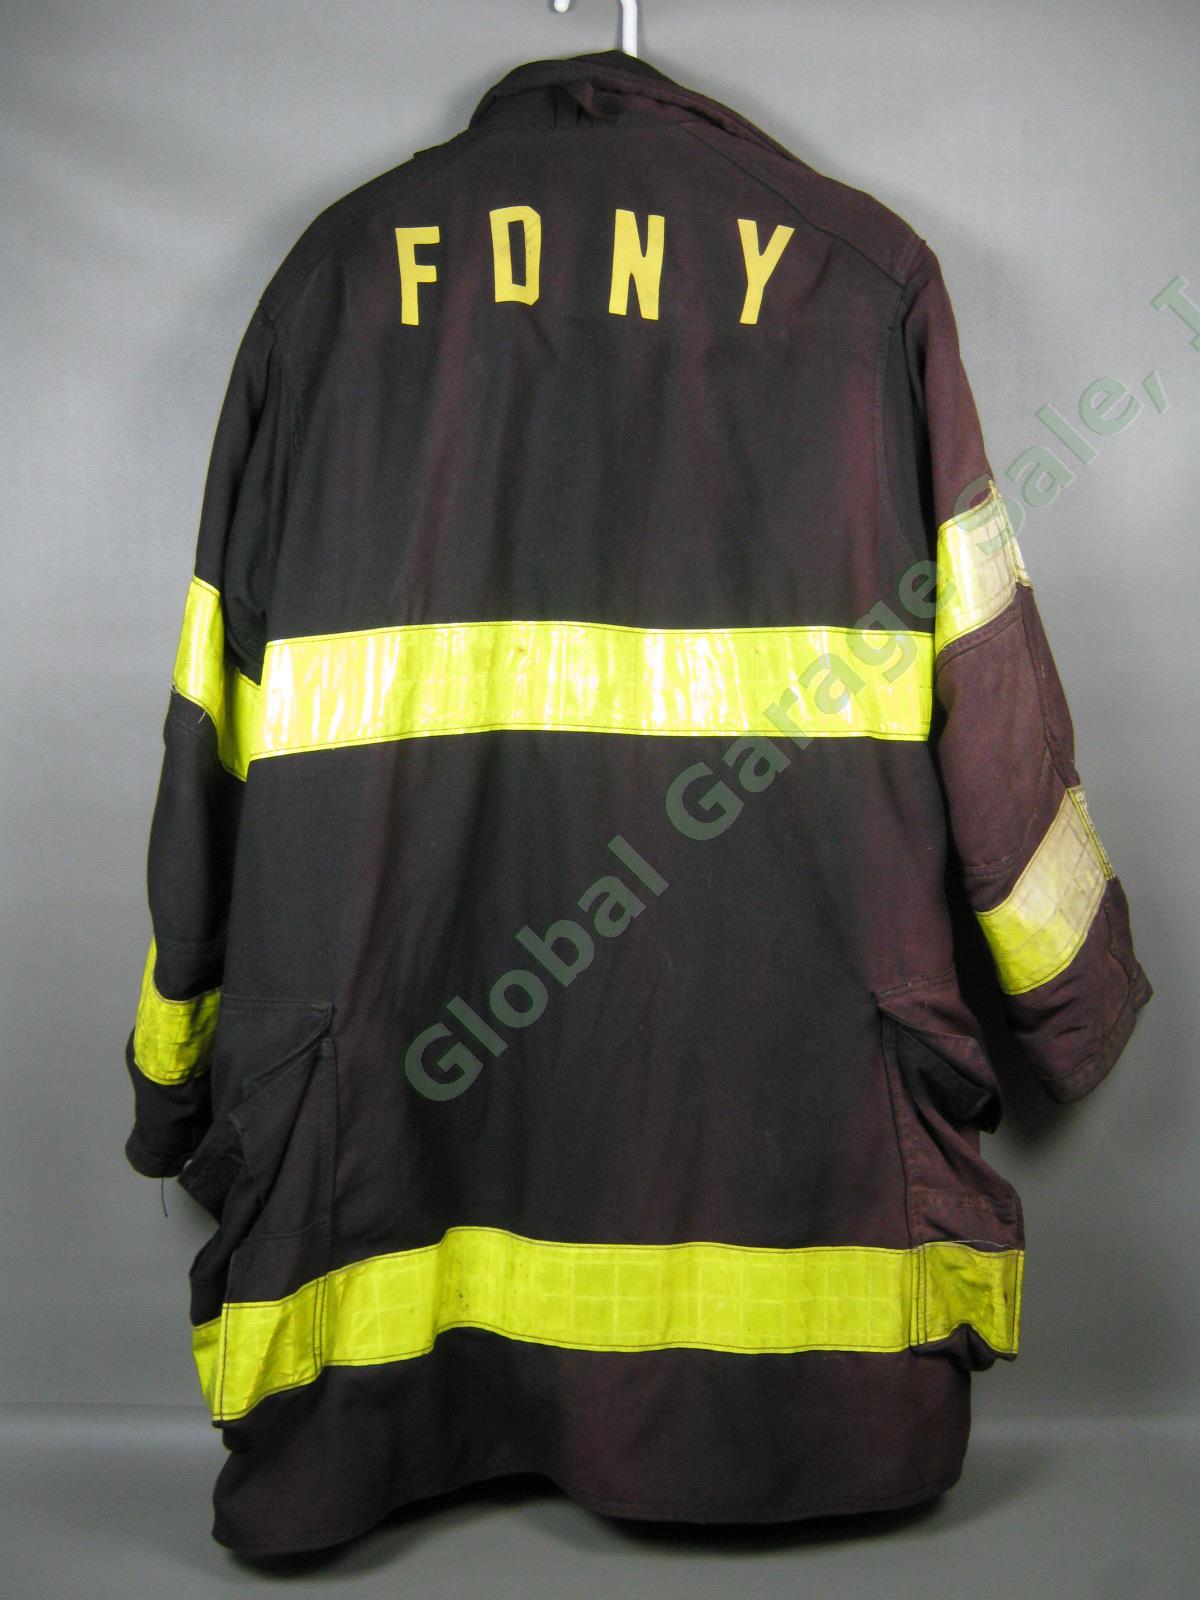 Vtg 1994 Janesville FDNY NY City Fire Dept Bunker Turnout Jacket Coat 42-40R NR! 2